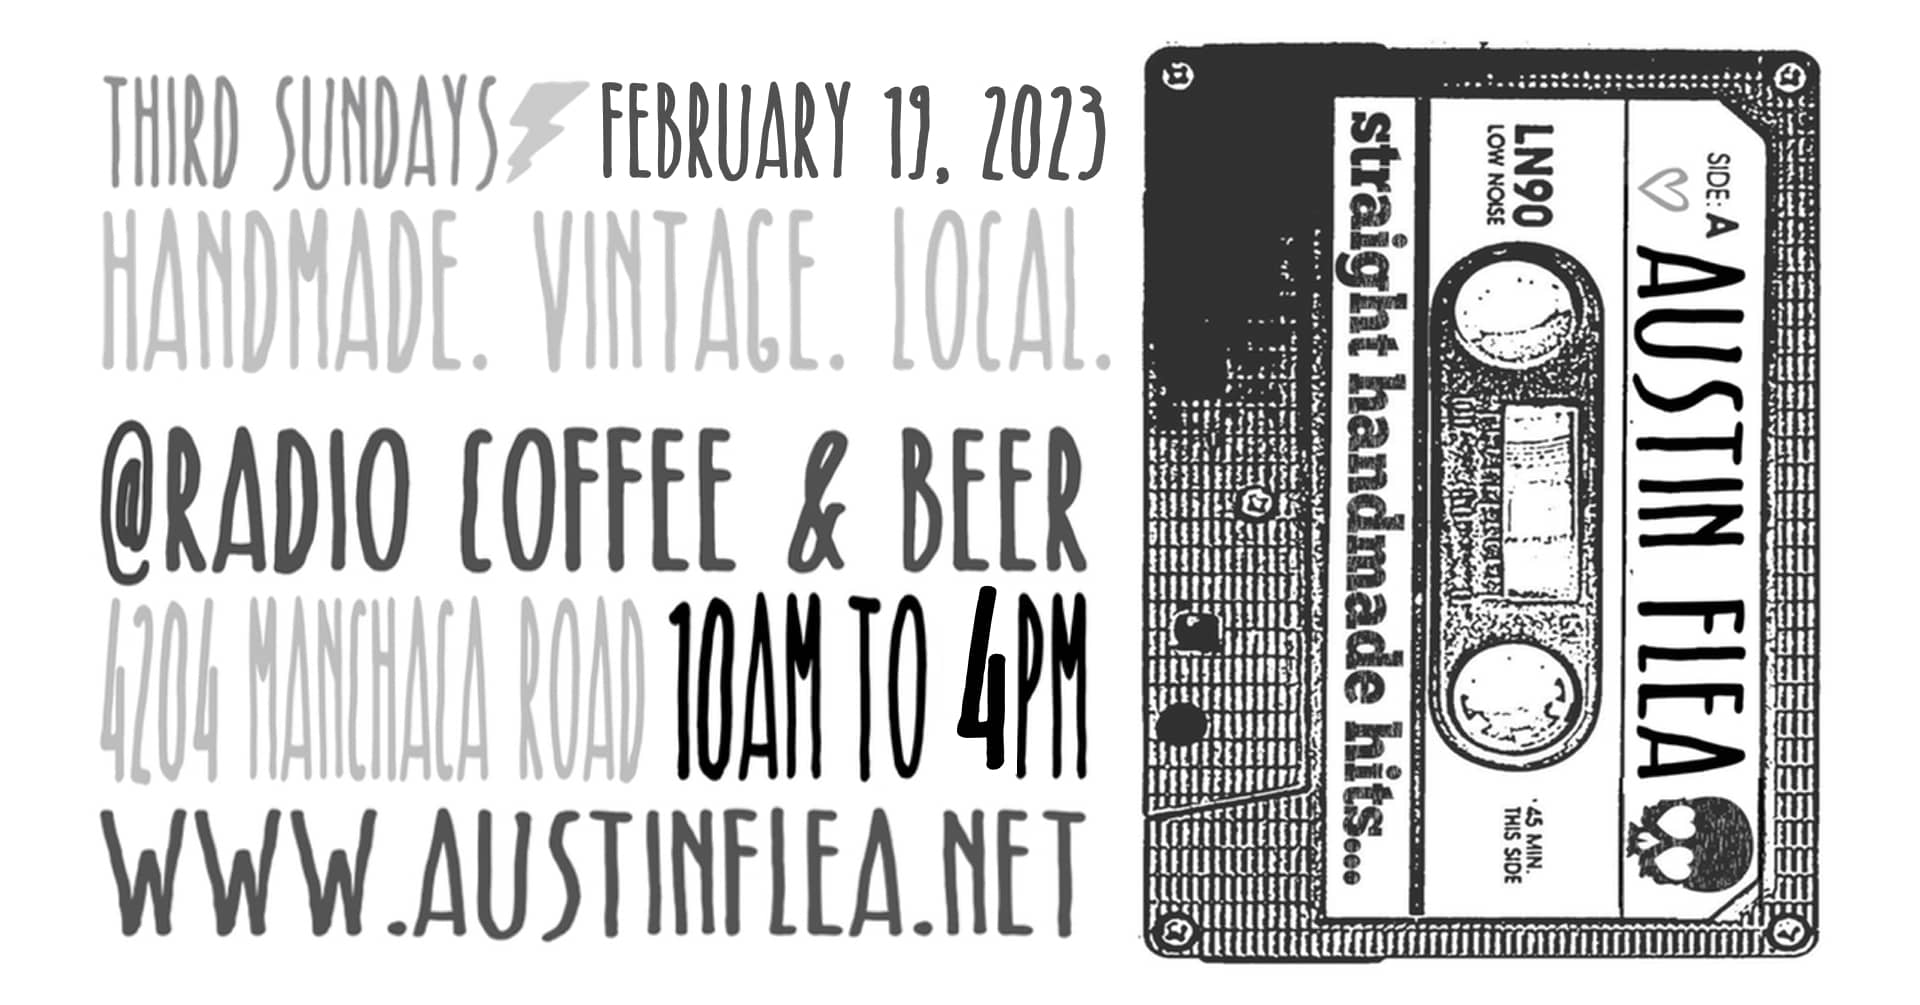 Radio Coffee and Flea Market flyer